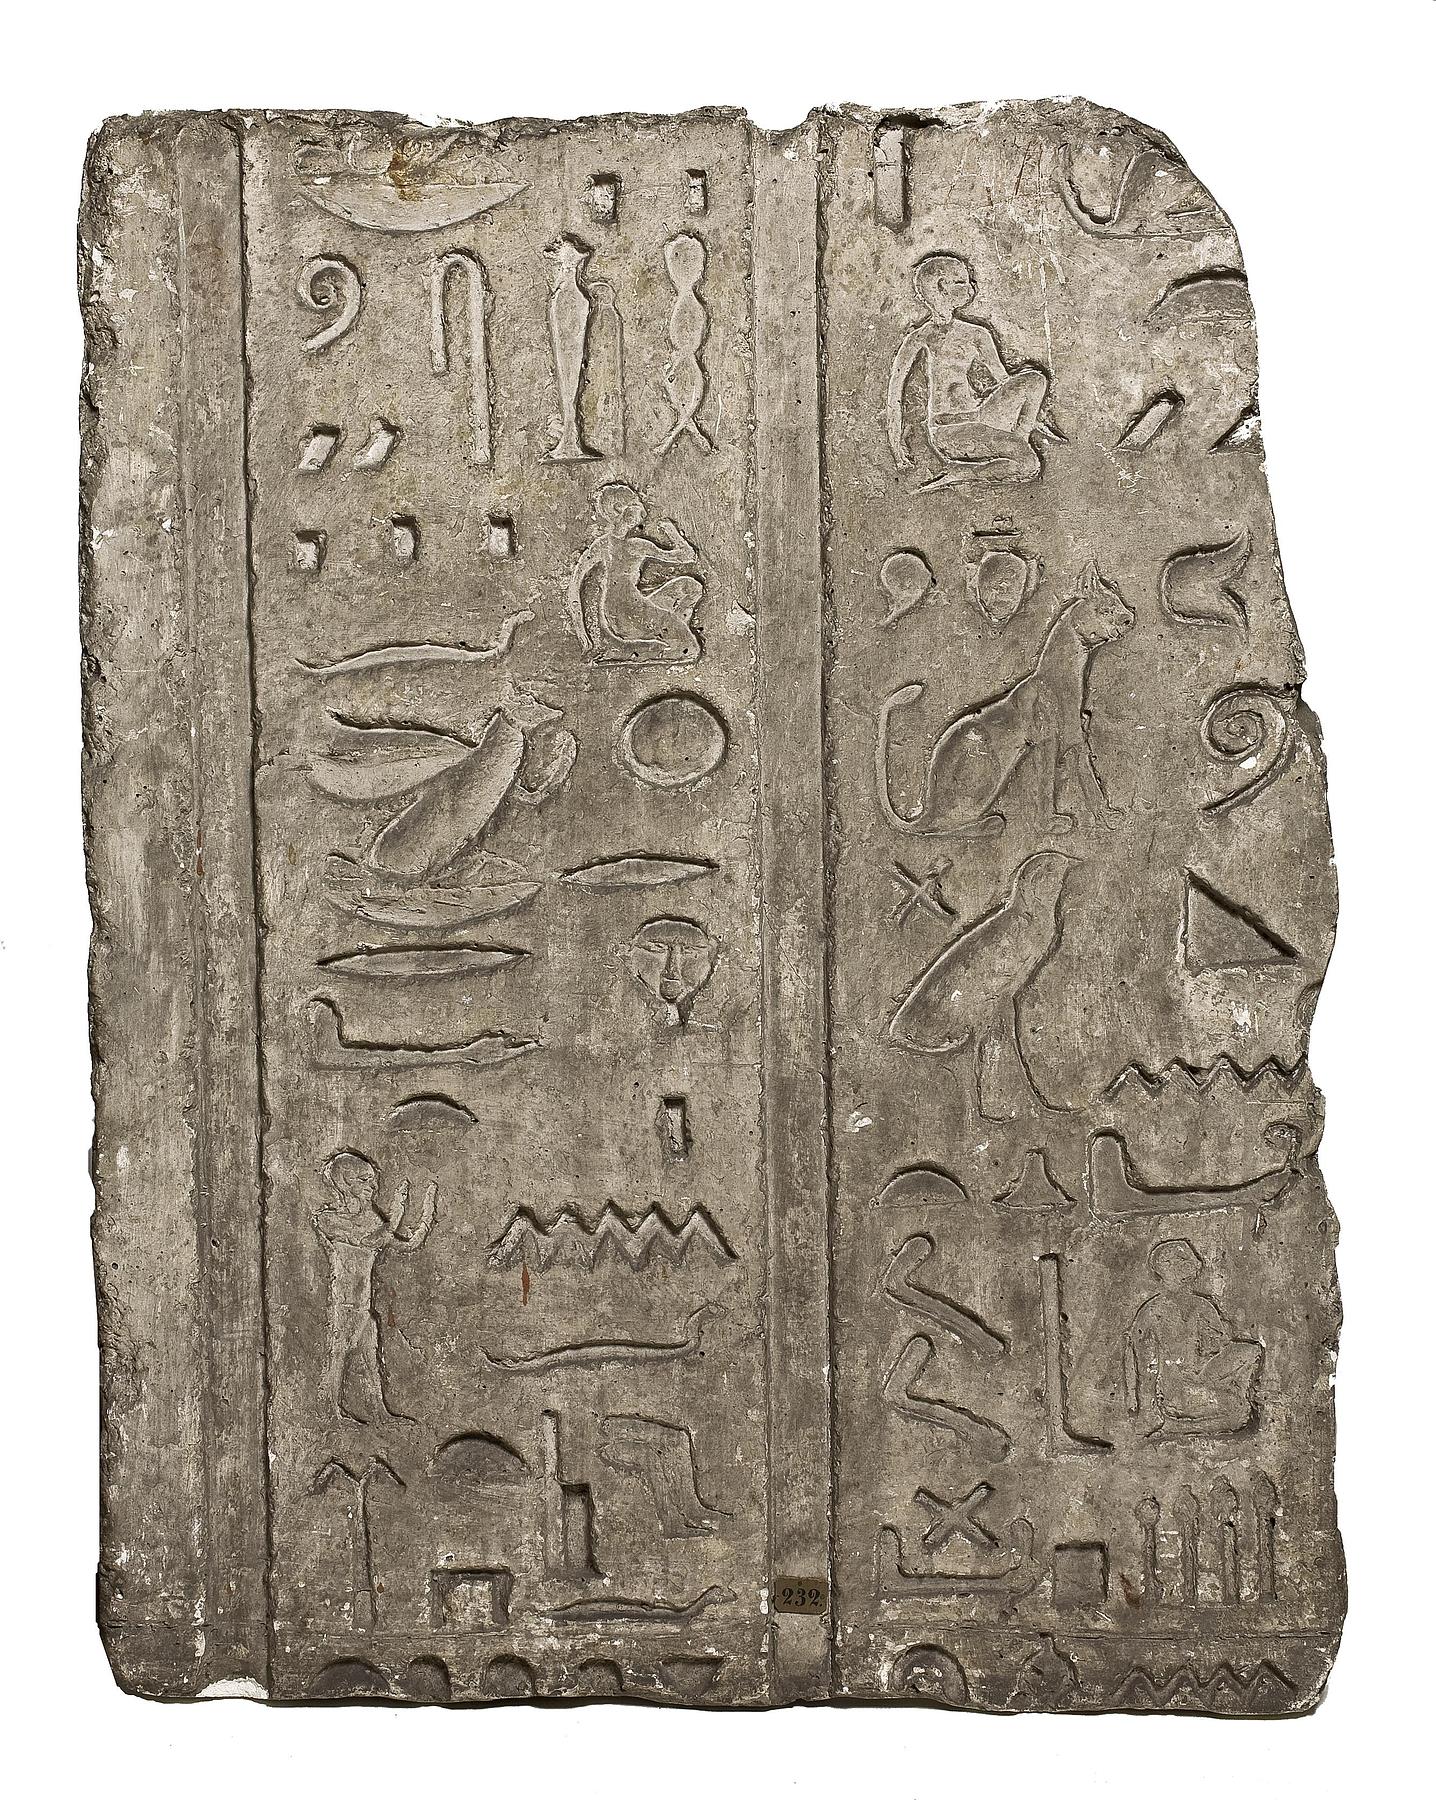 Hieroglyphic inscription, L232